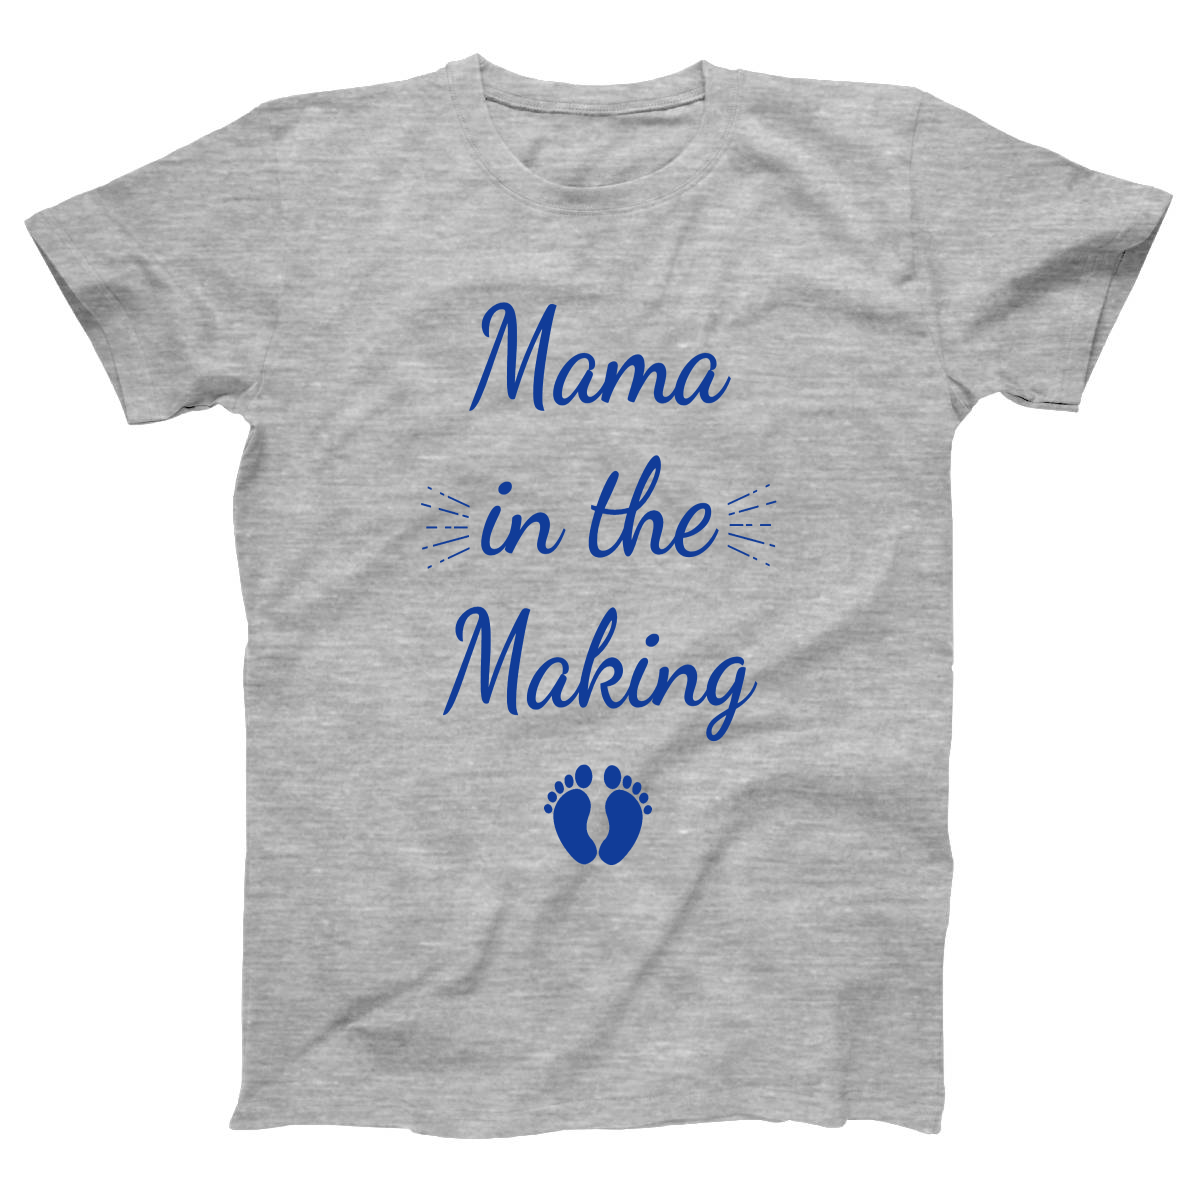 Mama in the Making Shirt Women's T-shirt | Gray